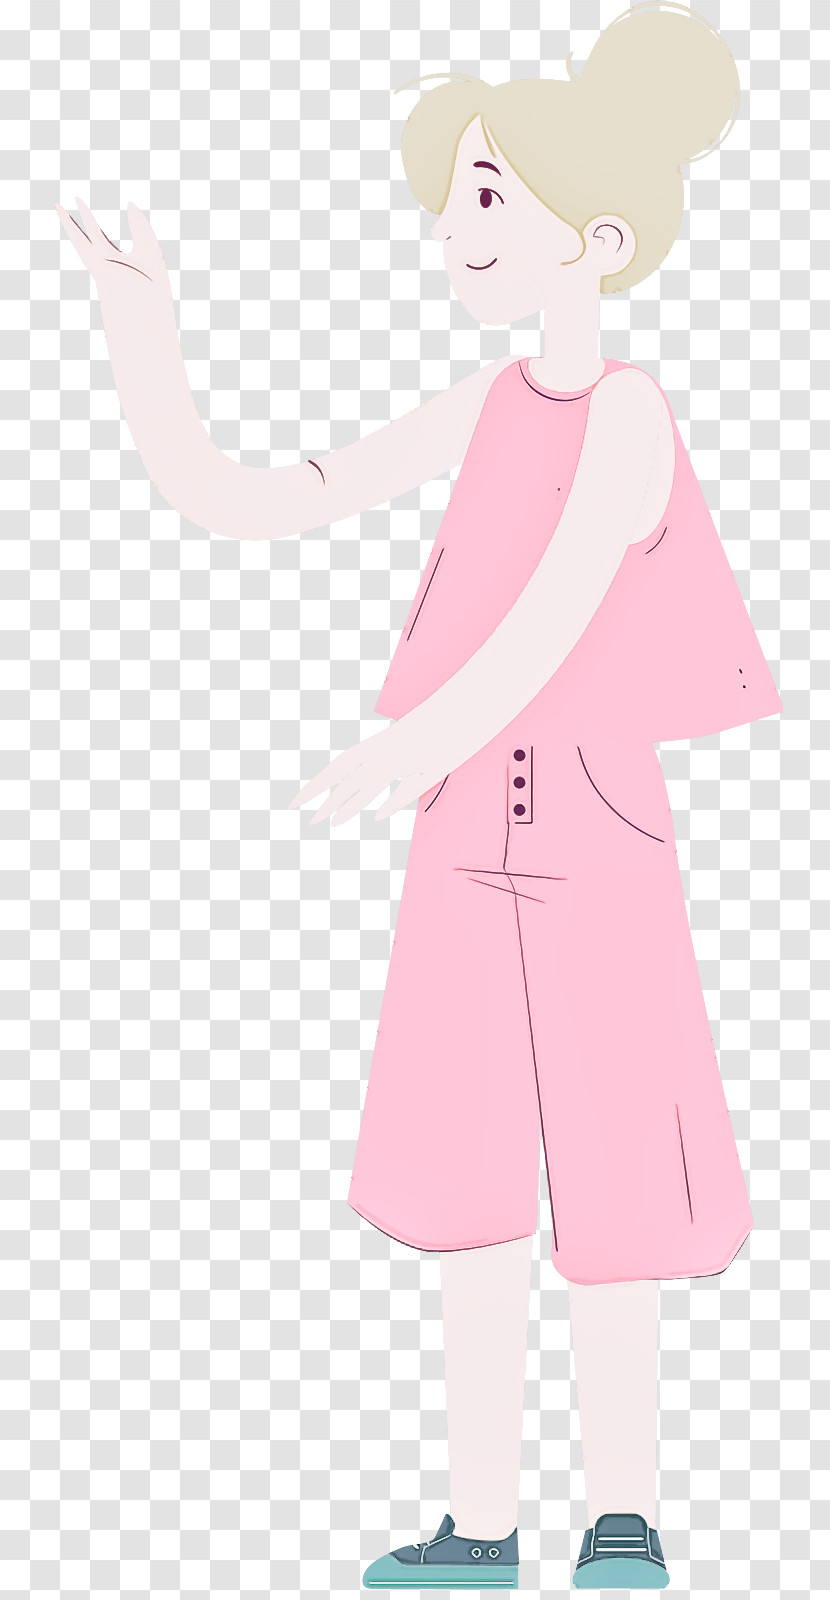 Clothing Costume Design Sailor Moon Crystal Minato Ward Shibakoen Junior High School Uniform Acos, Medium Cartoon Character Transparent PNG